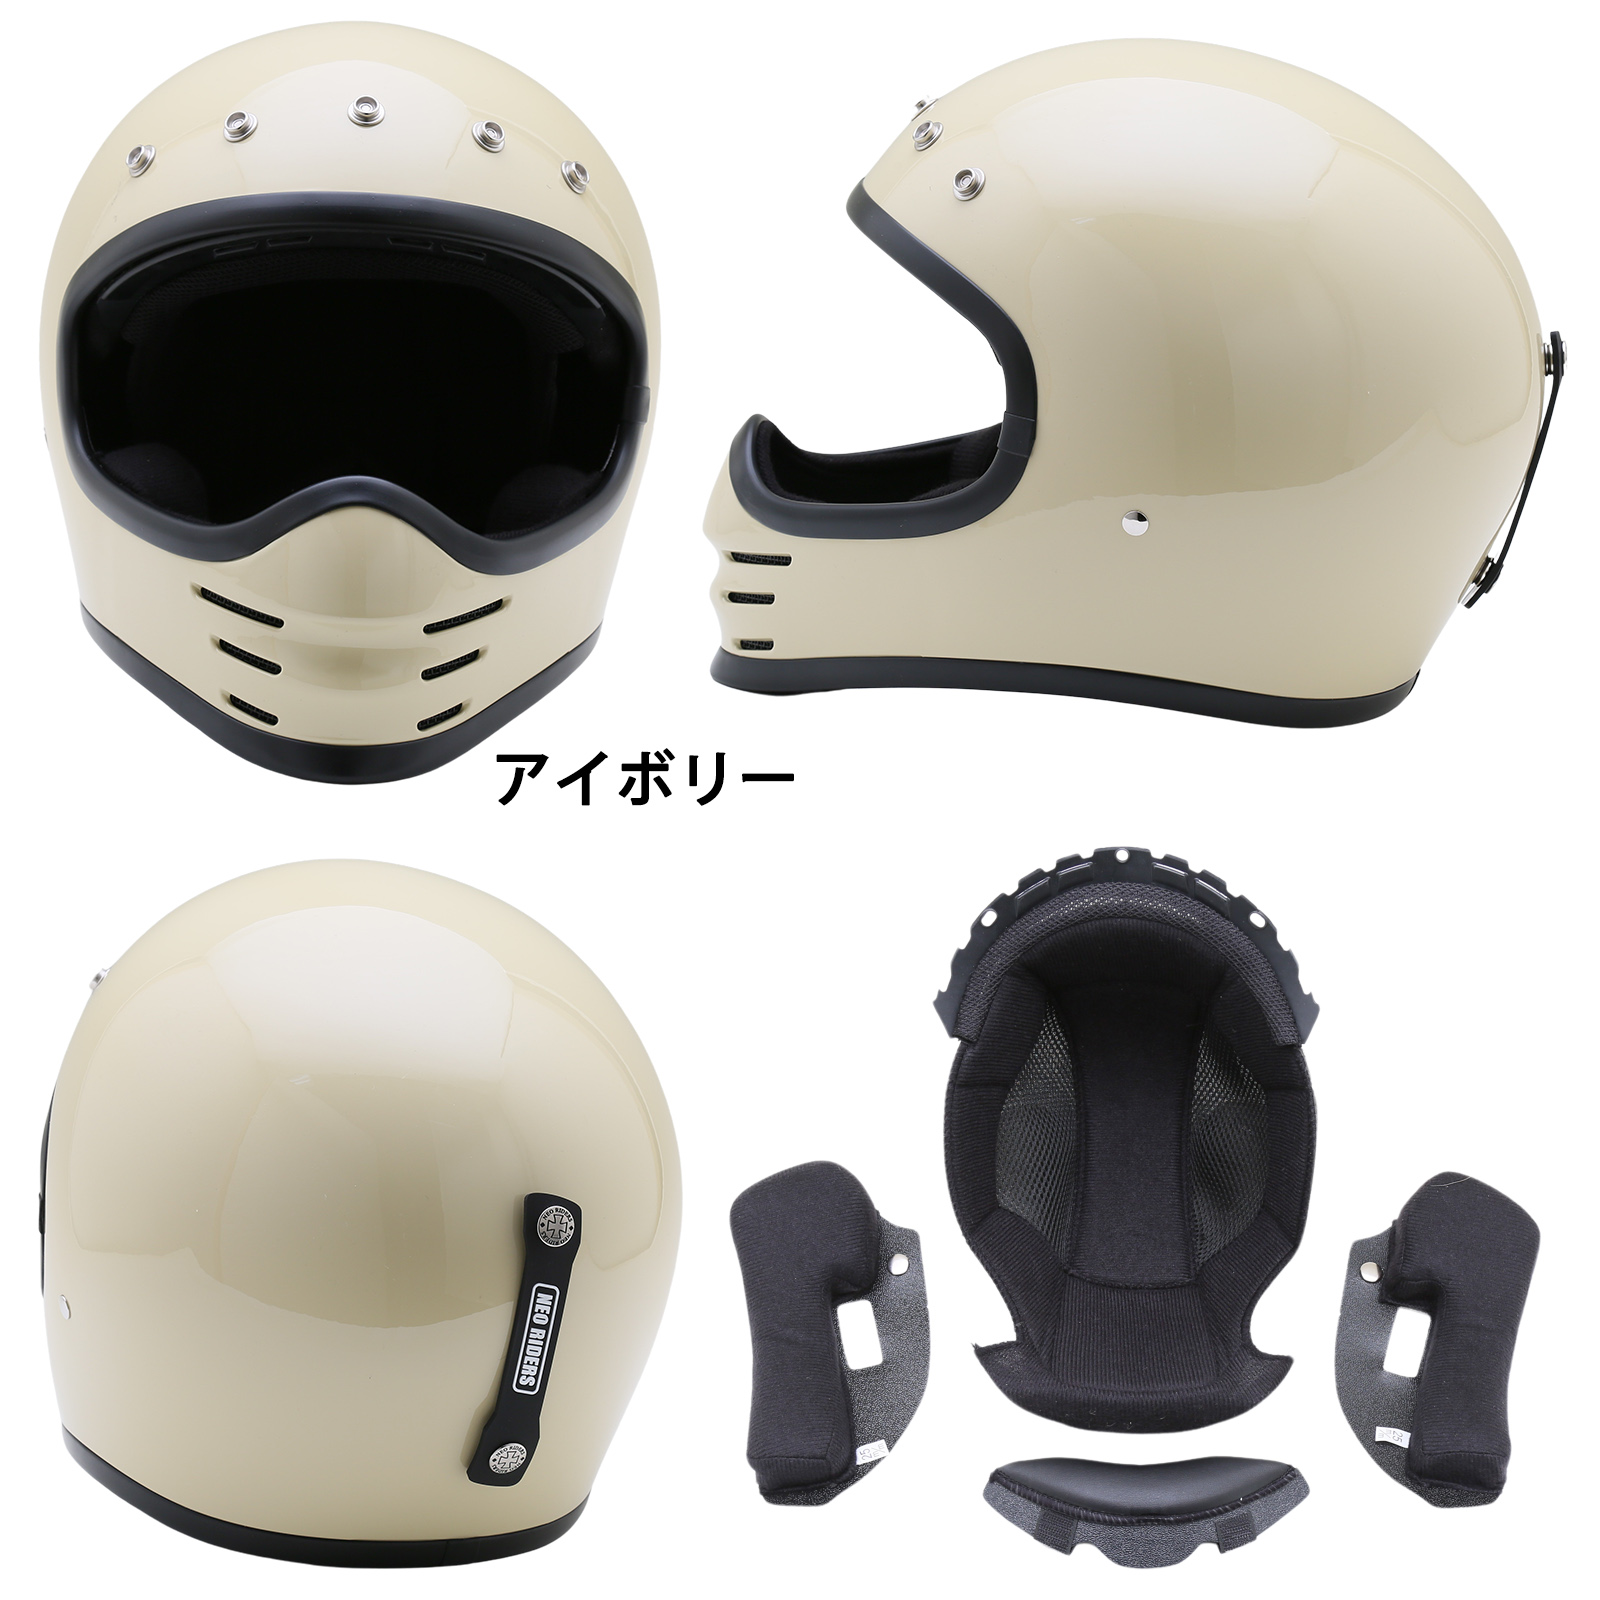  мотоцикл шлем [ Revue сотрудничество . подарок ] ZRR все 8 цвет full-face шлем (SG/PSC есть ) очки очки разрез ввод NEORIDERS